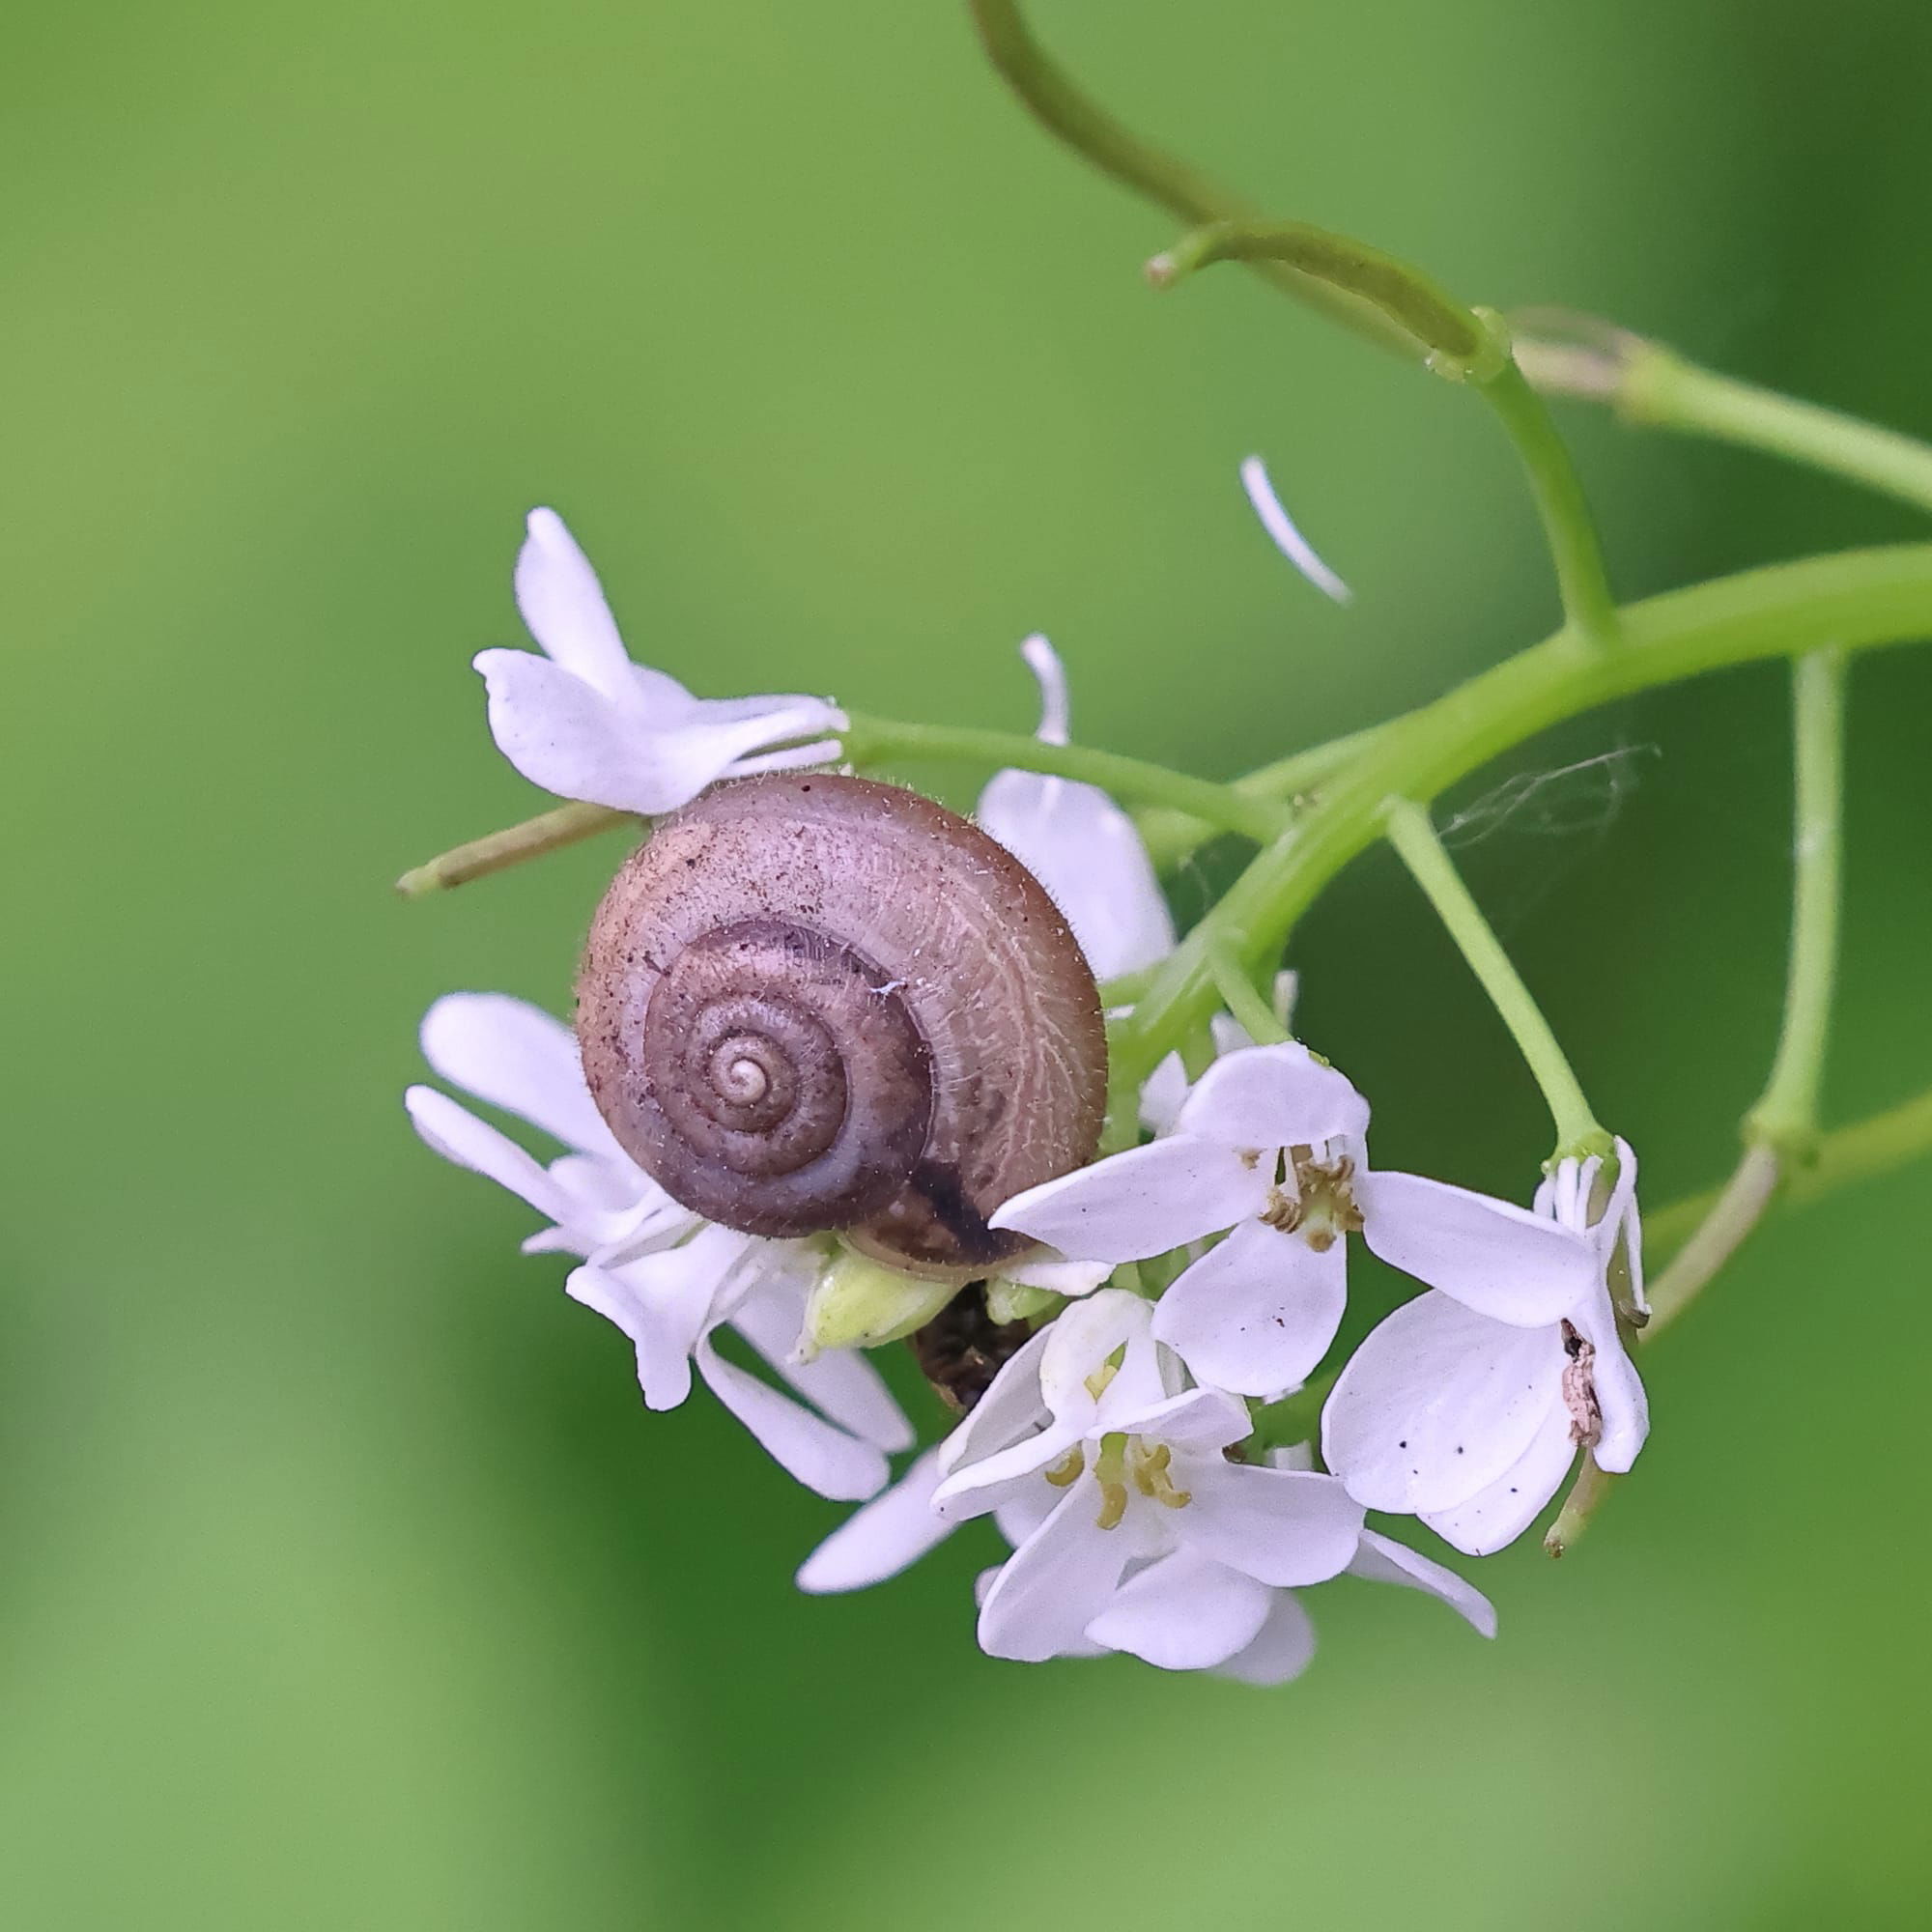 Hairy snail